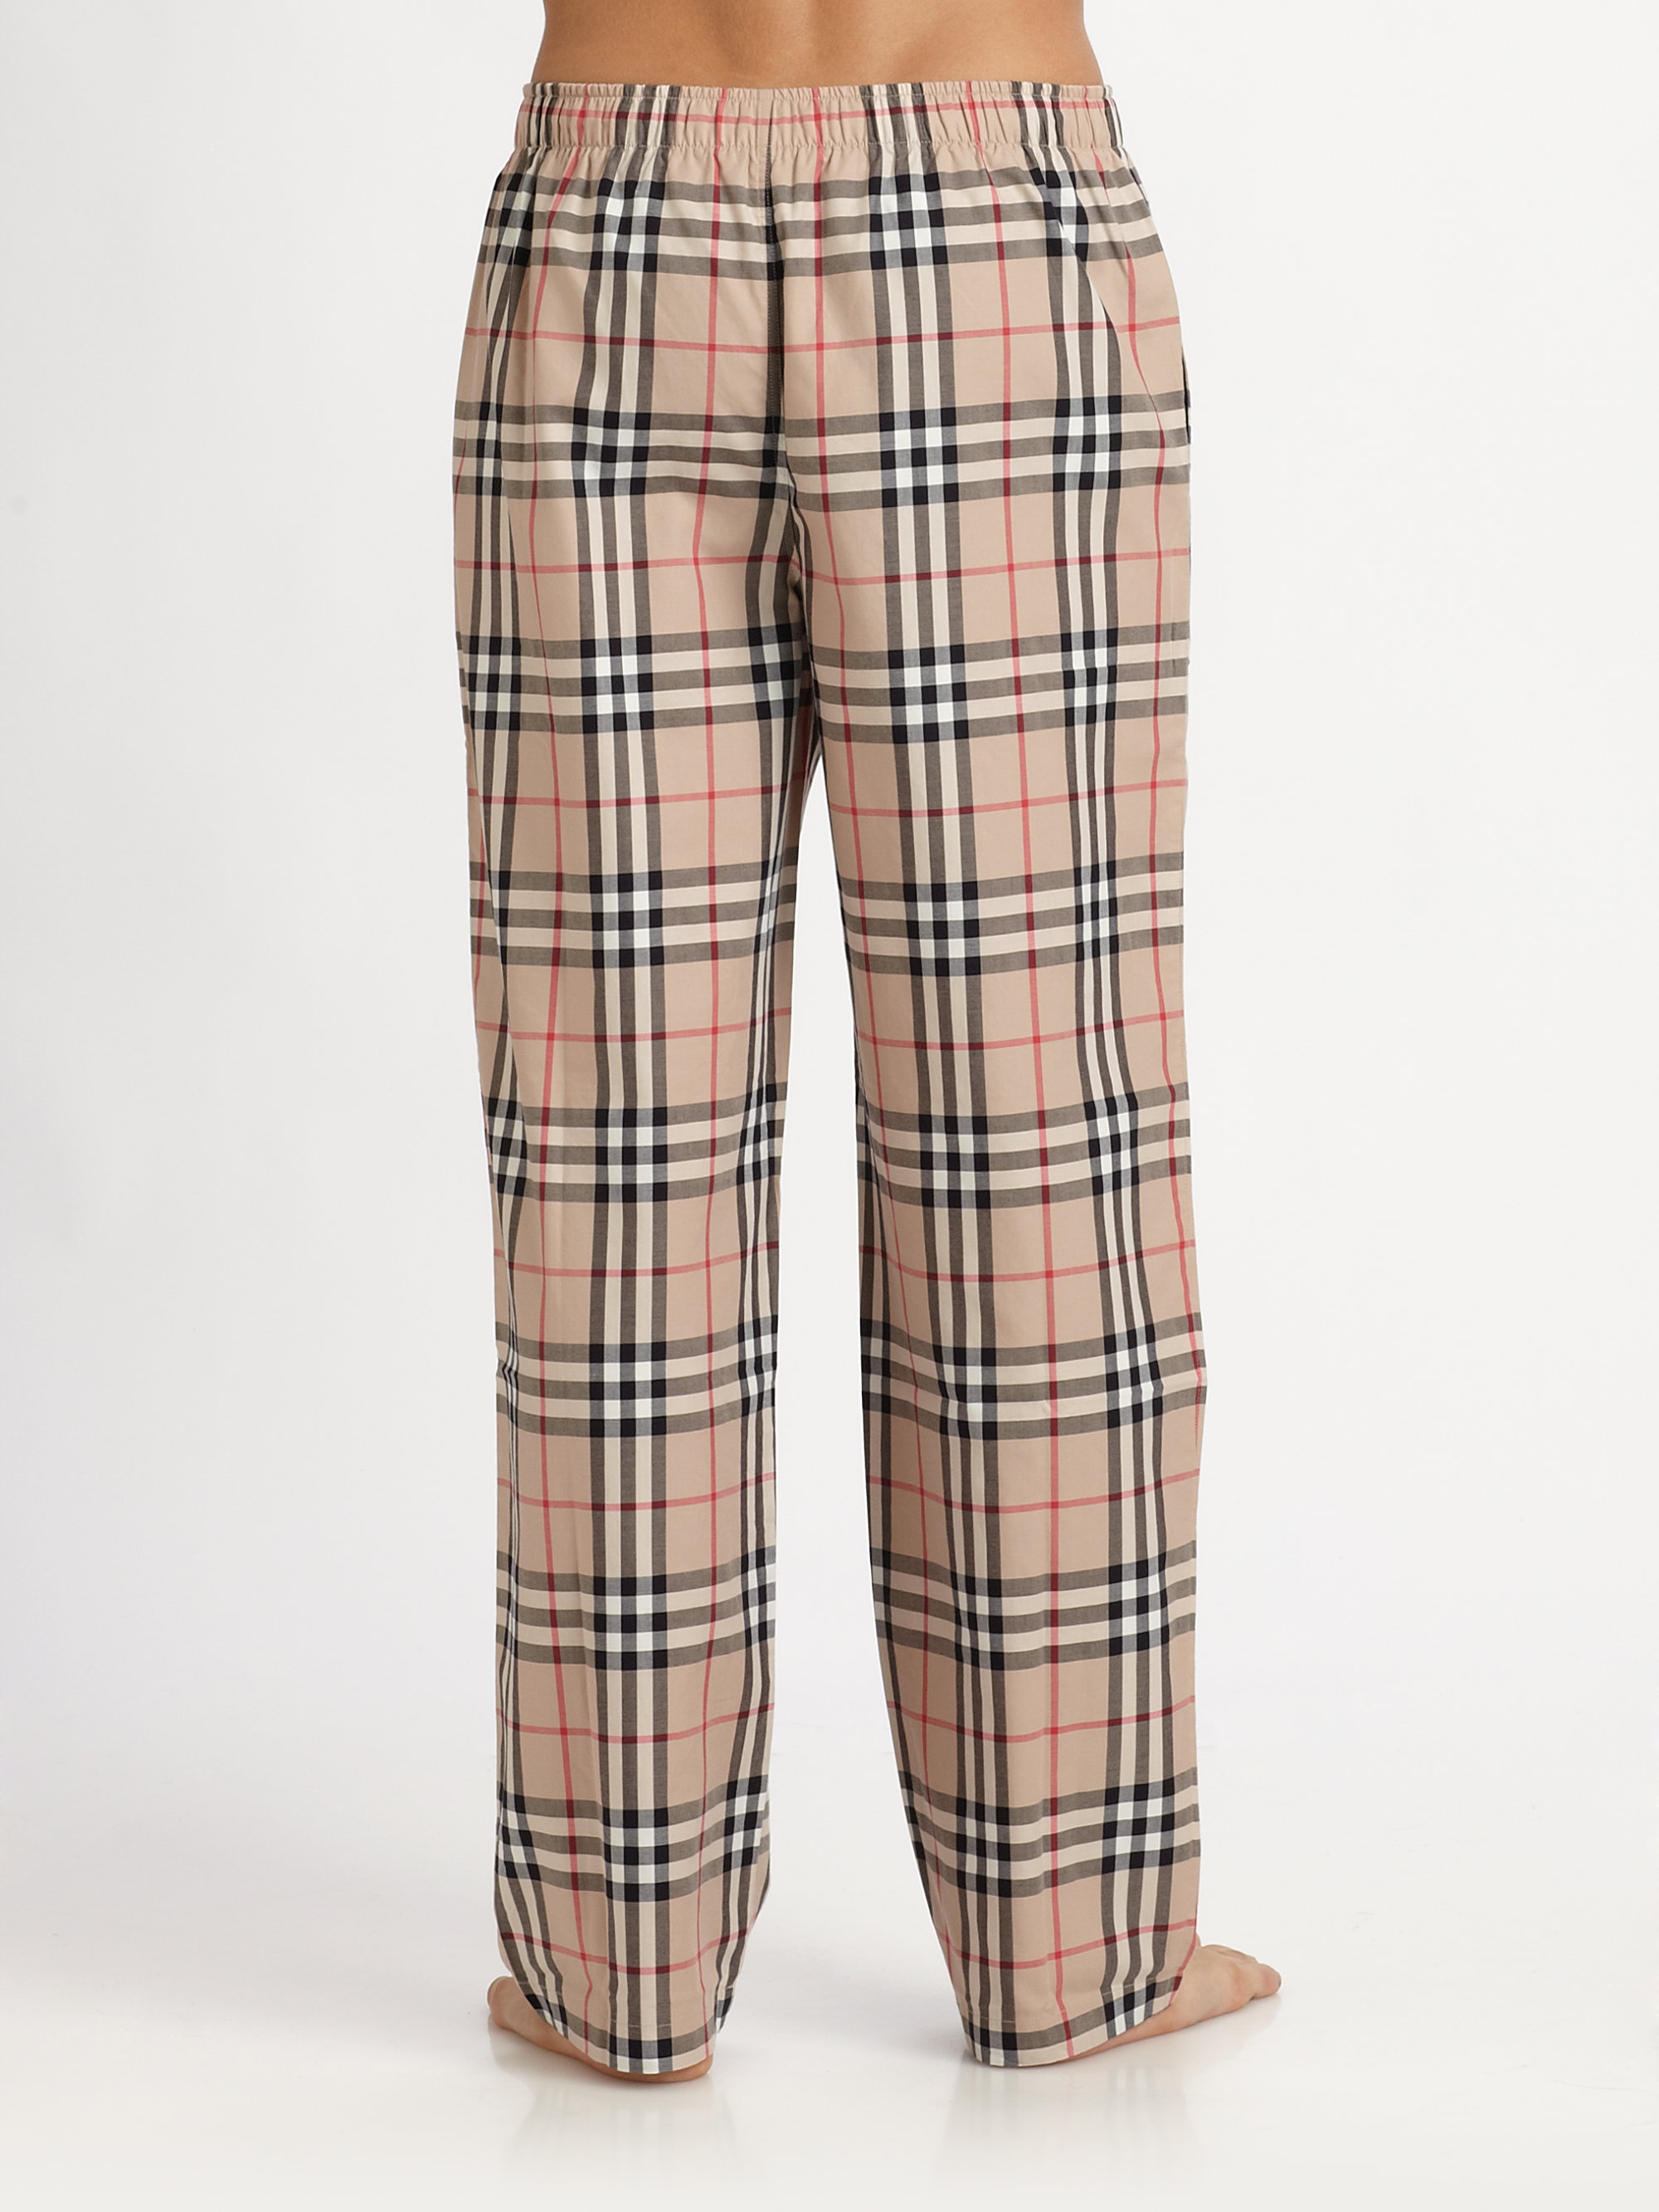 burberry checkered pants